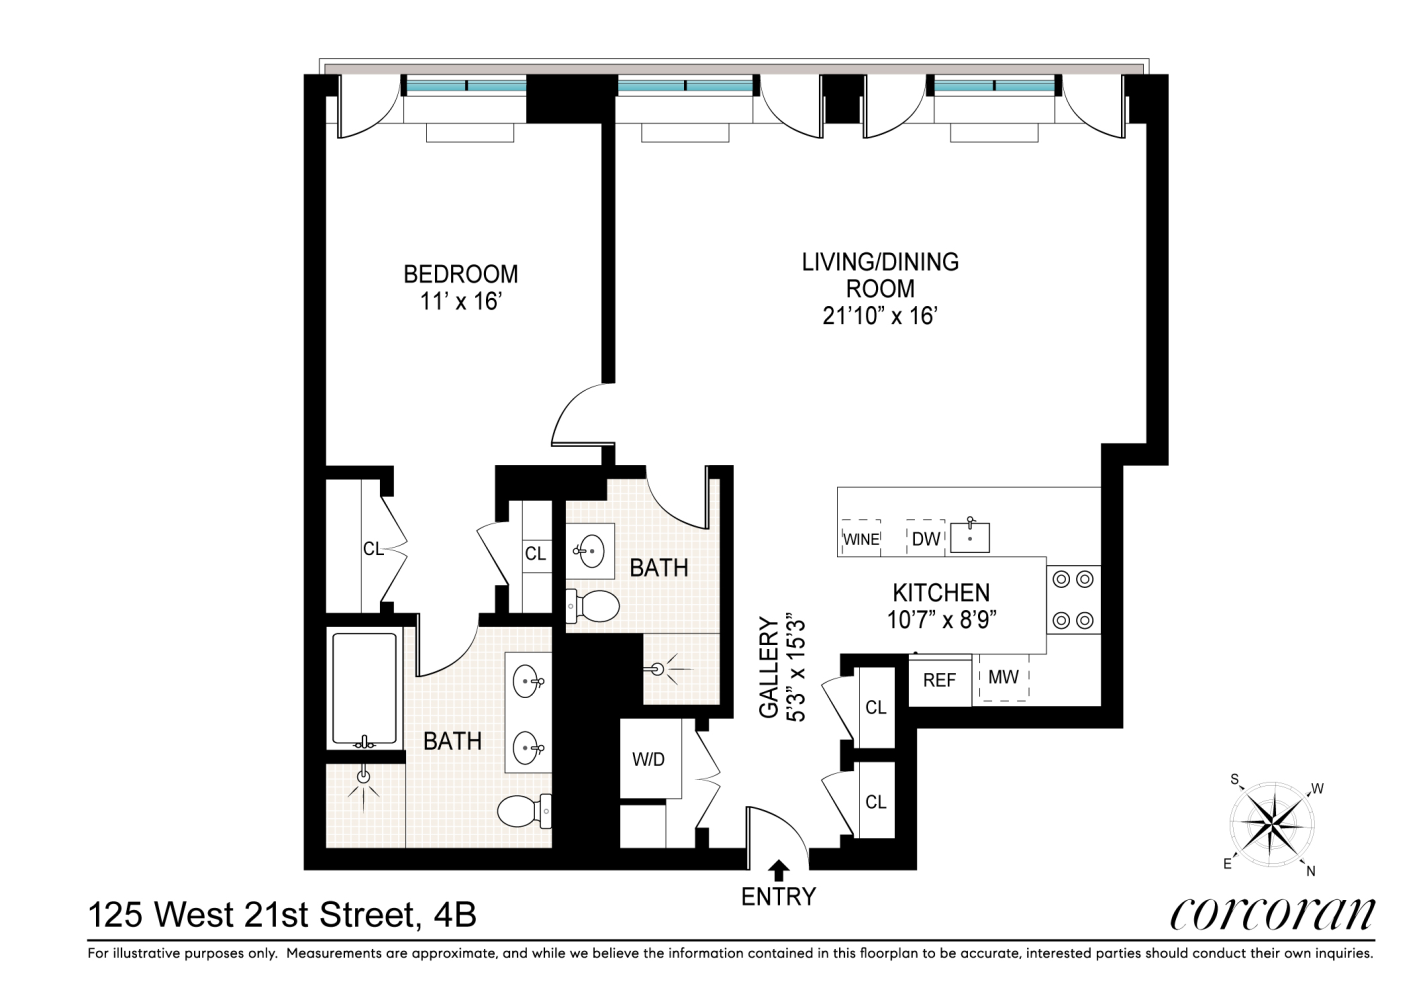 Floorplan for 125 West 21st Street, 4B